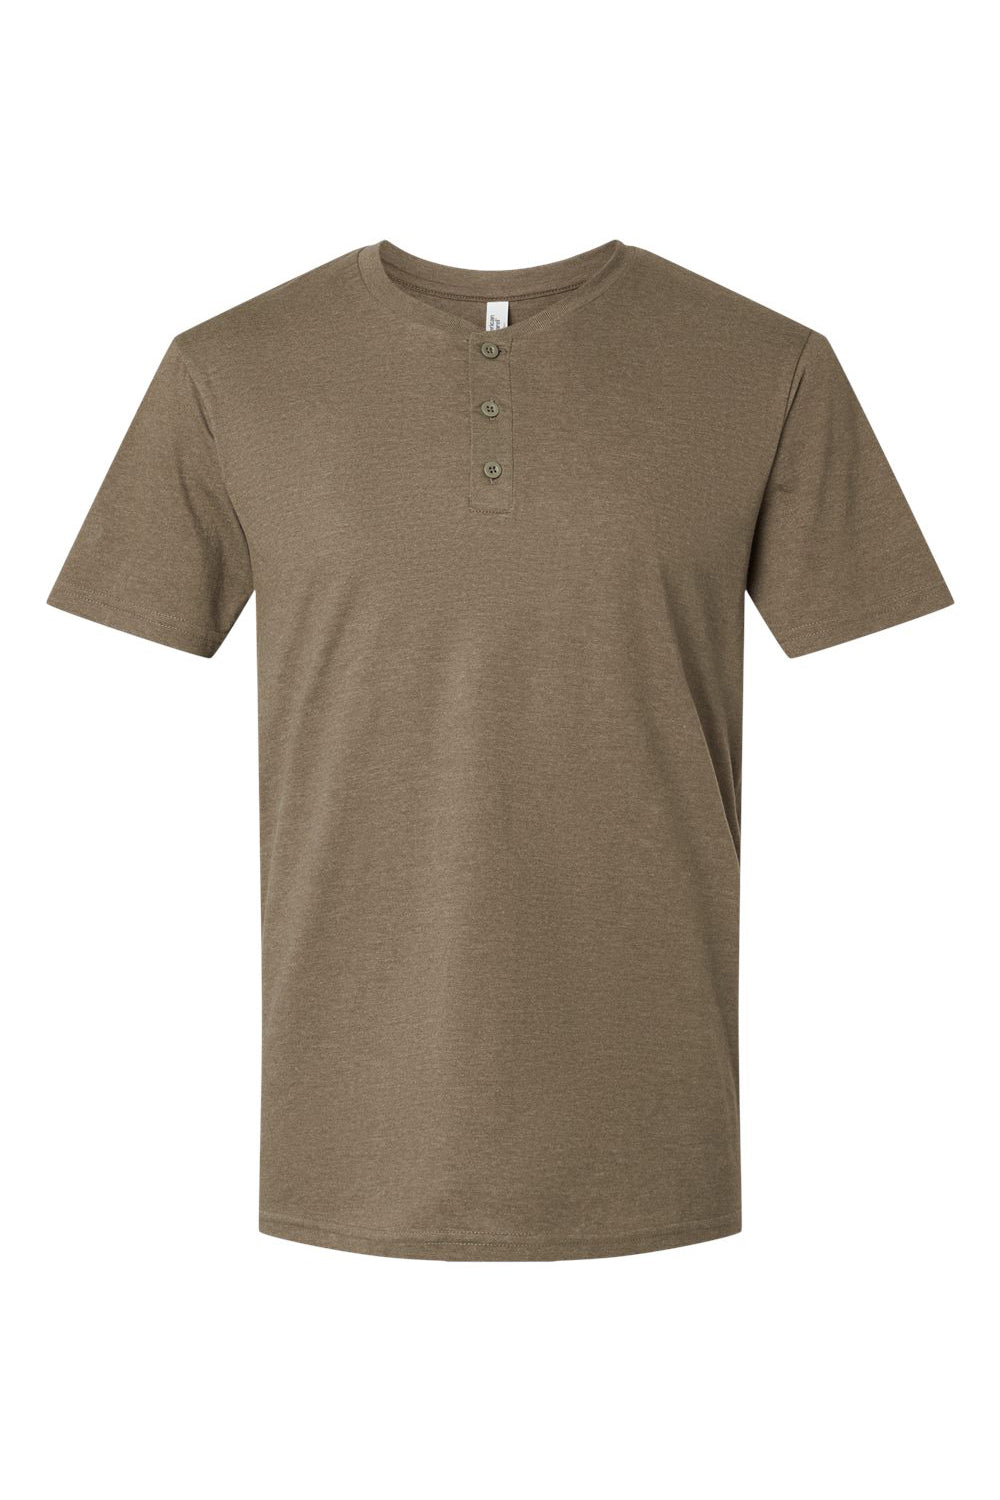 American Apparel 2004CVC Mens CVC Short Sleeve Henley T-Shirt Heather Army Brown Flat Front